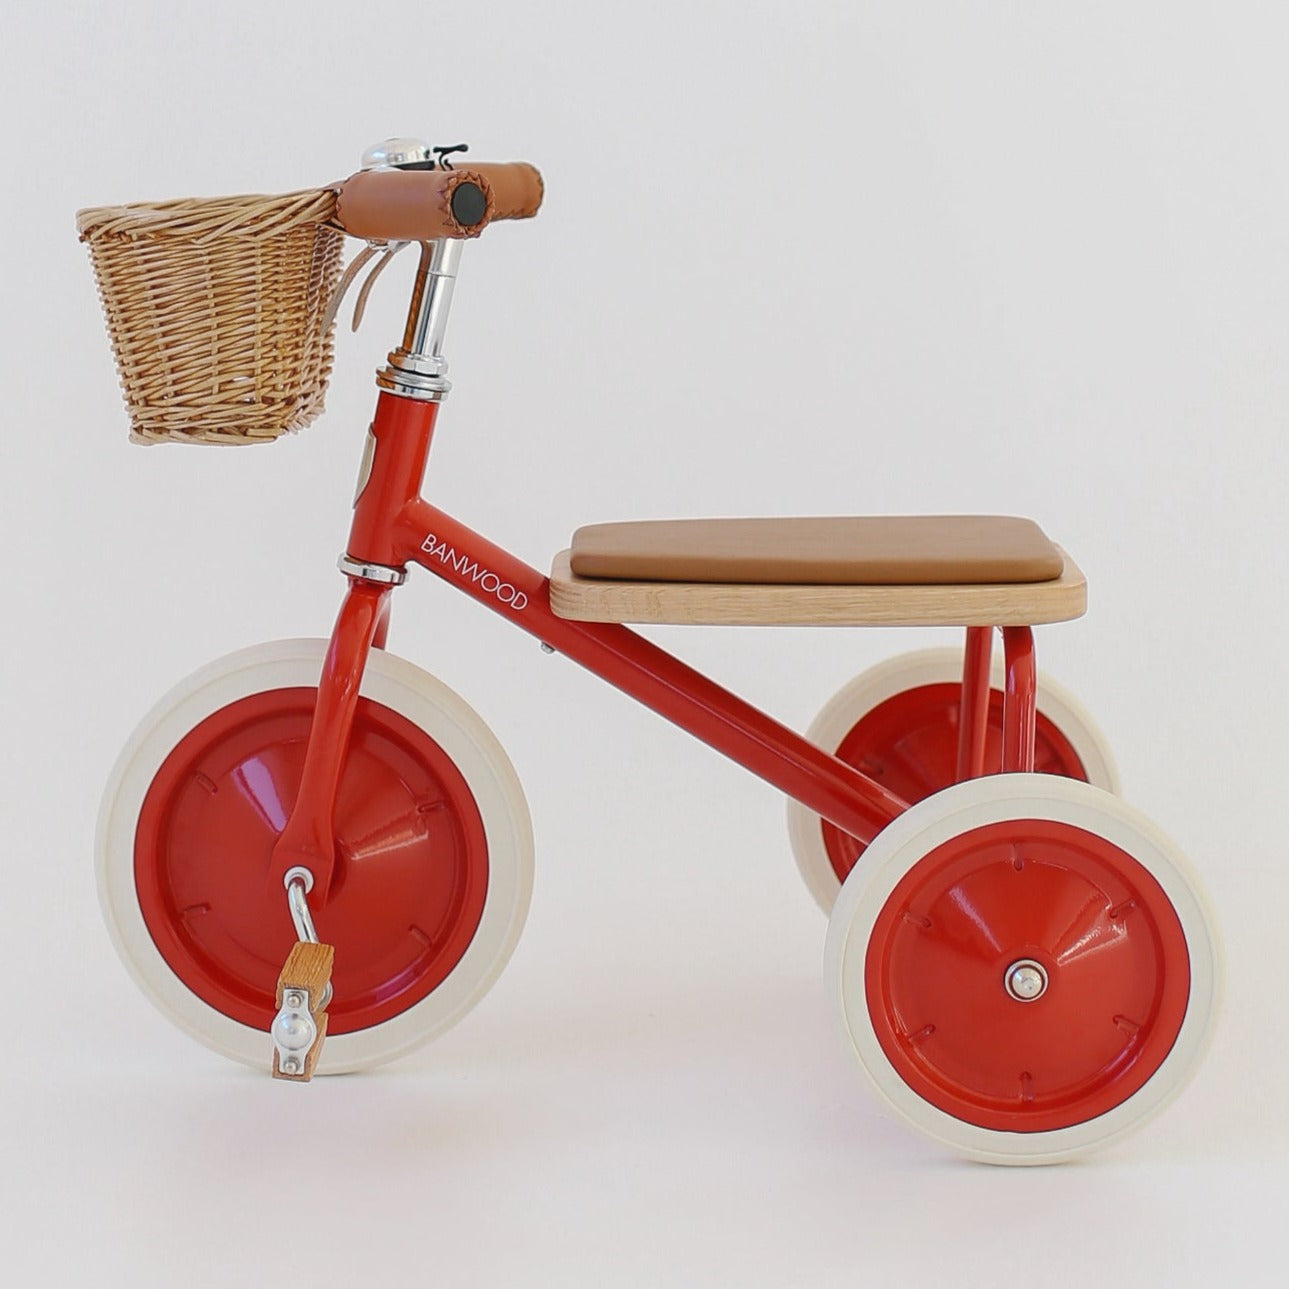 Banwood Trike Red | Children of the Wild